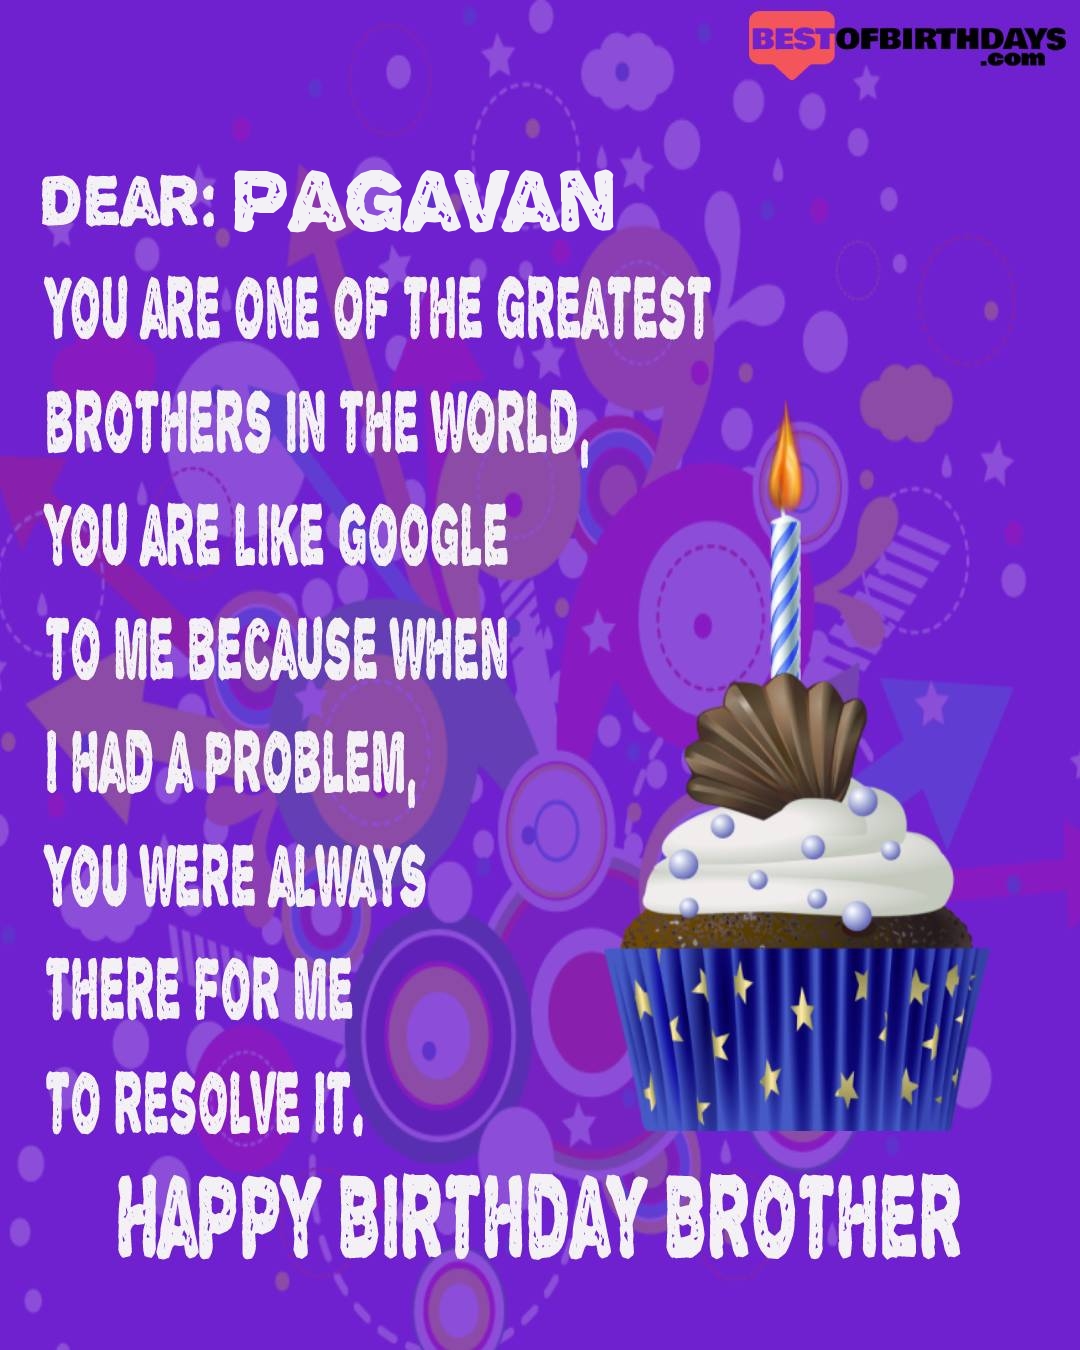 Happy birthday pagavan bhai brother bro